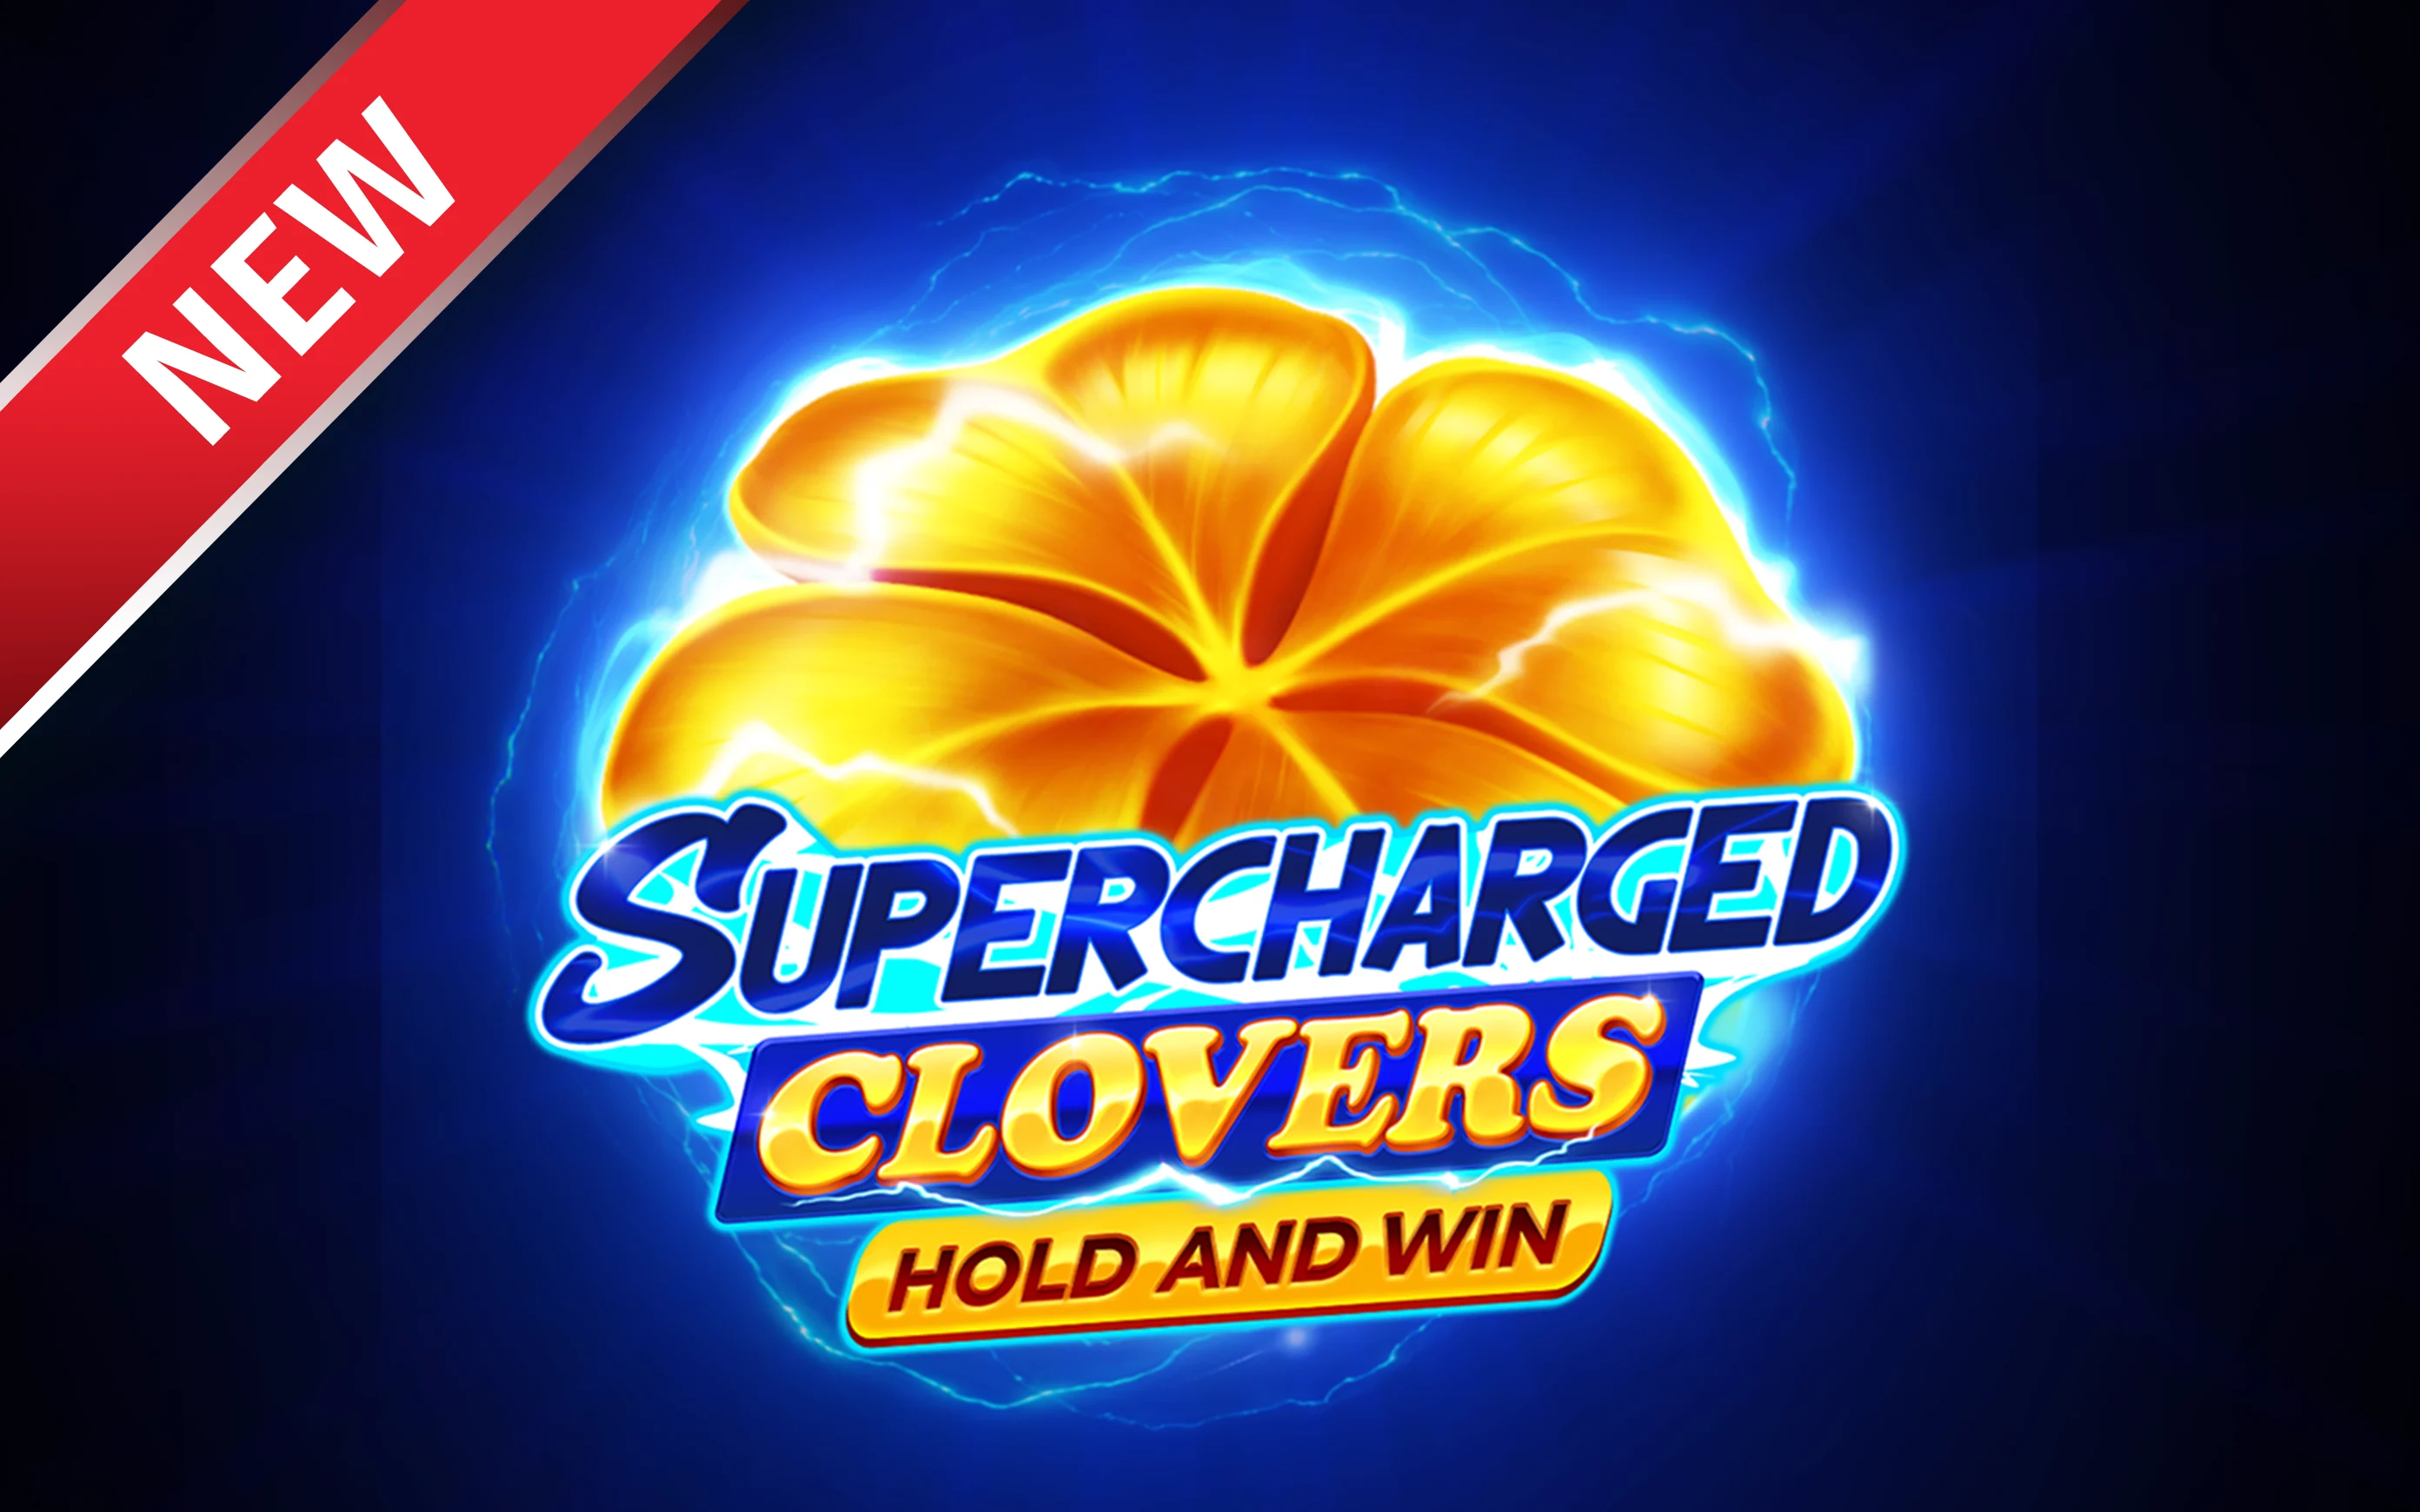 Zagraj w Supercharged Clovers: Hold and Win w kasynie online Starcasino.be